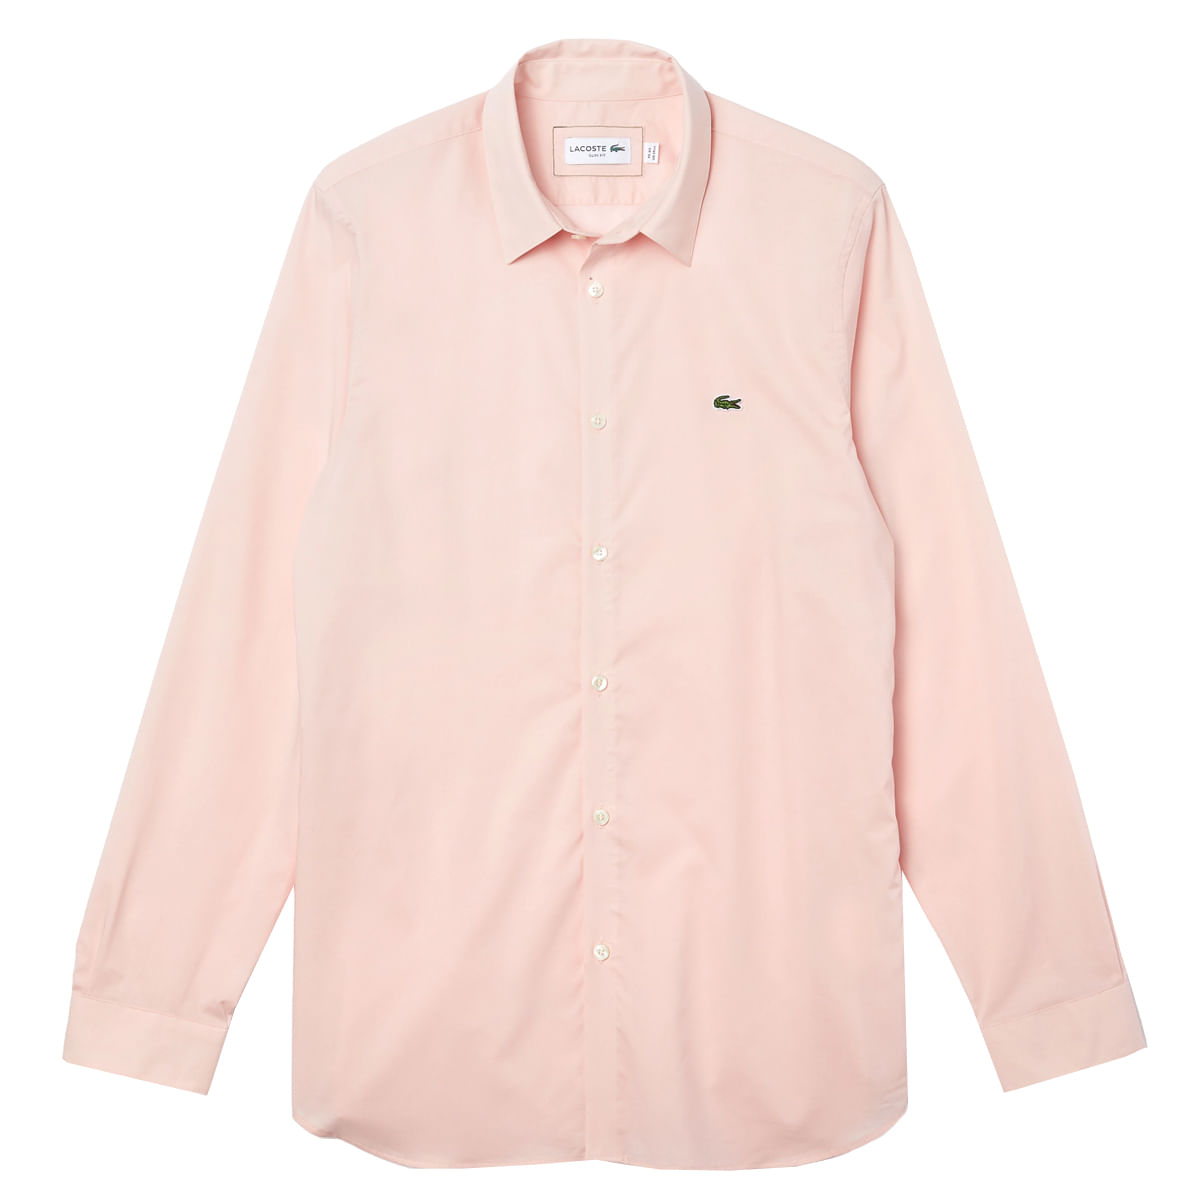 Camiseta Lacoste rosa de hombre-b